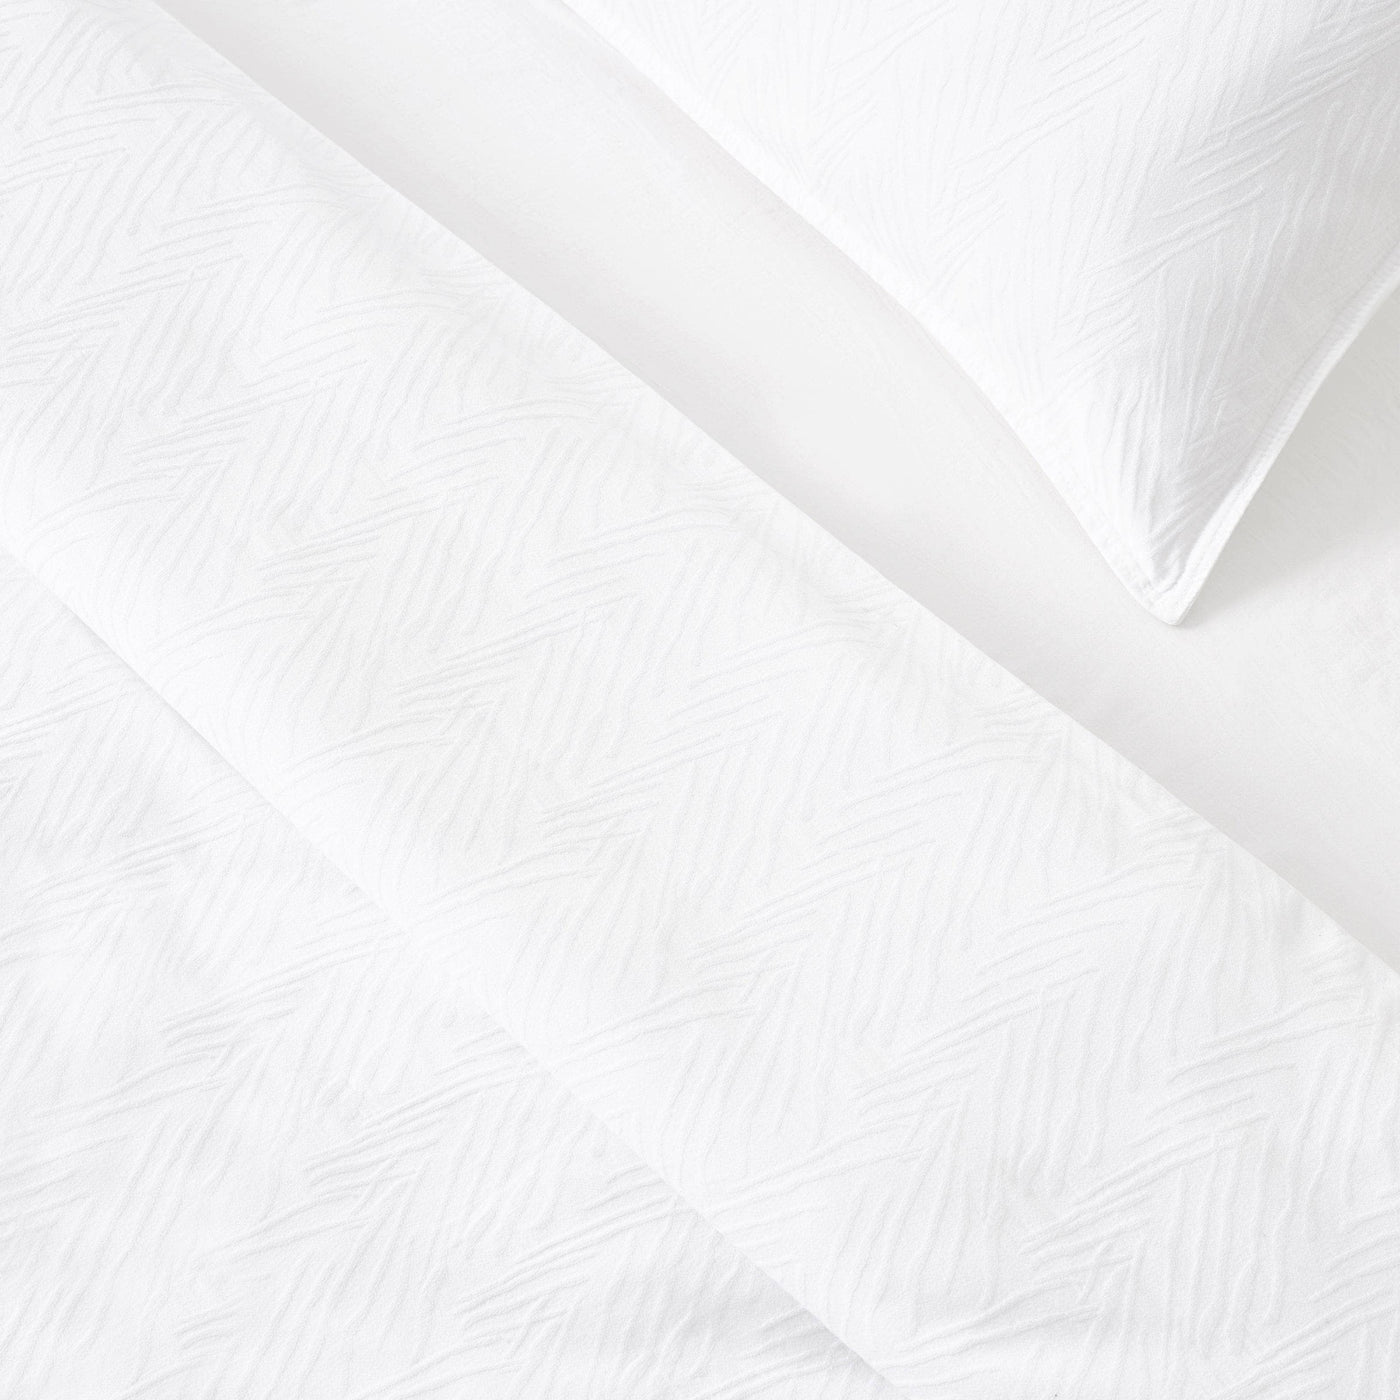 Freddie 100% Turkish Cotton Jacquard 300 TC Duvet Cover Set + Fitted Sheet, White, Super King Size Bedding Sets sazy.com